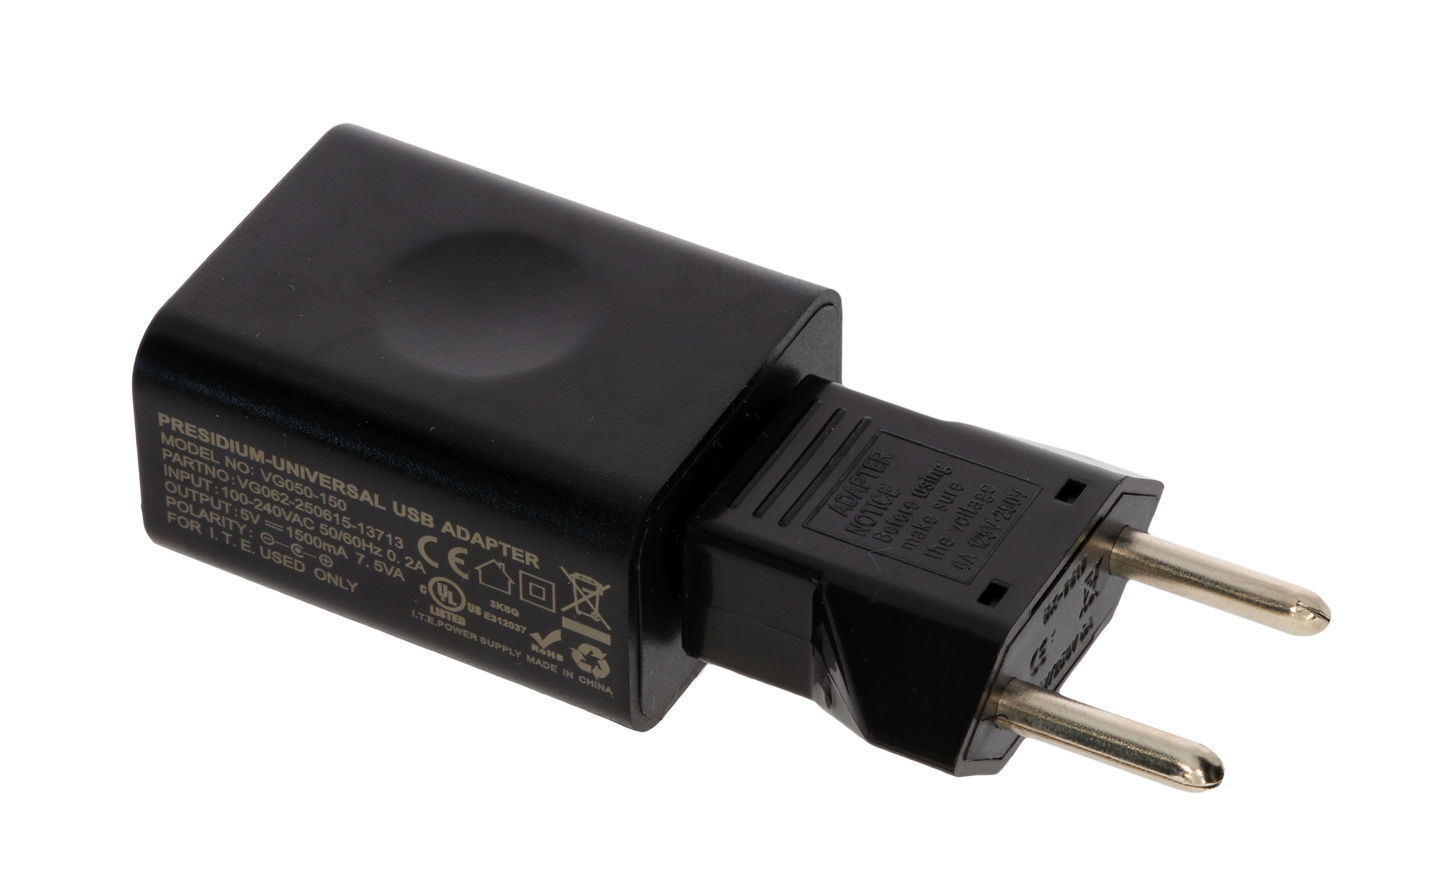 USB-adaptor for Presidium testers